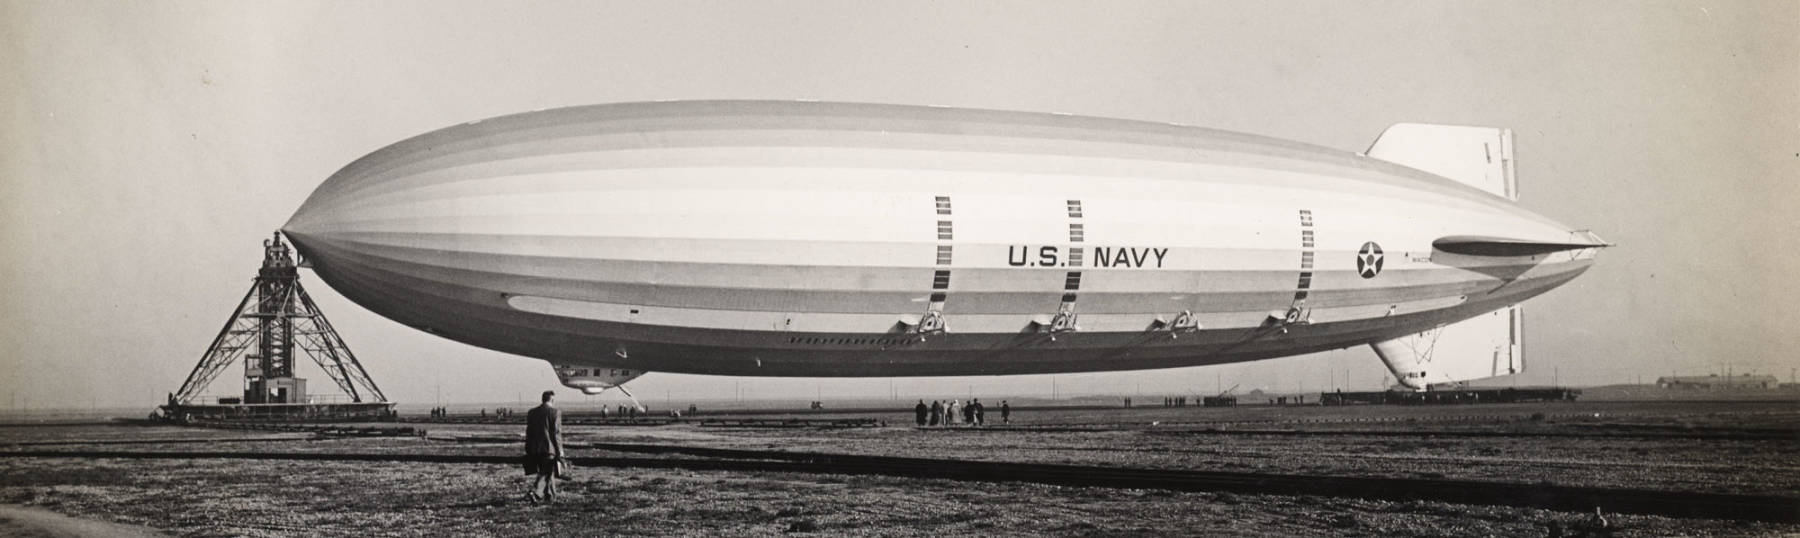 U.S. Navy airship USS Macon, from https://sanctuaries.noaa.gov/news/press/2010/pr021110.html